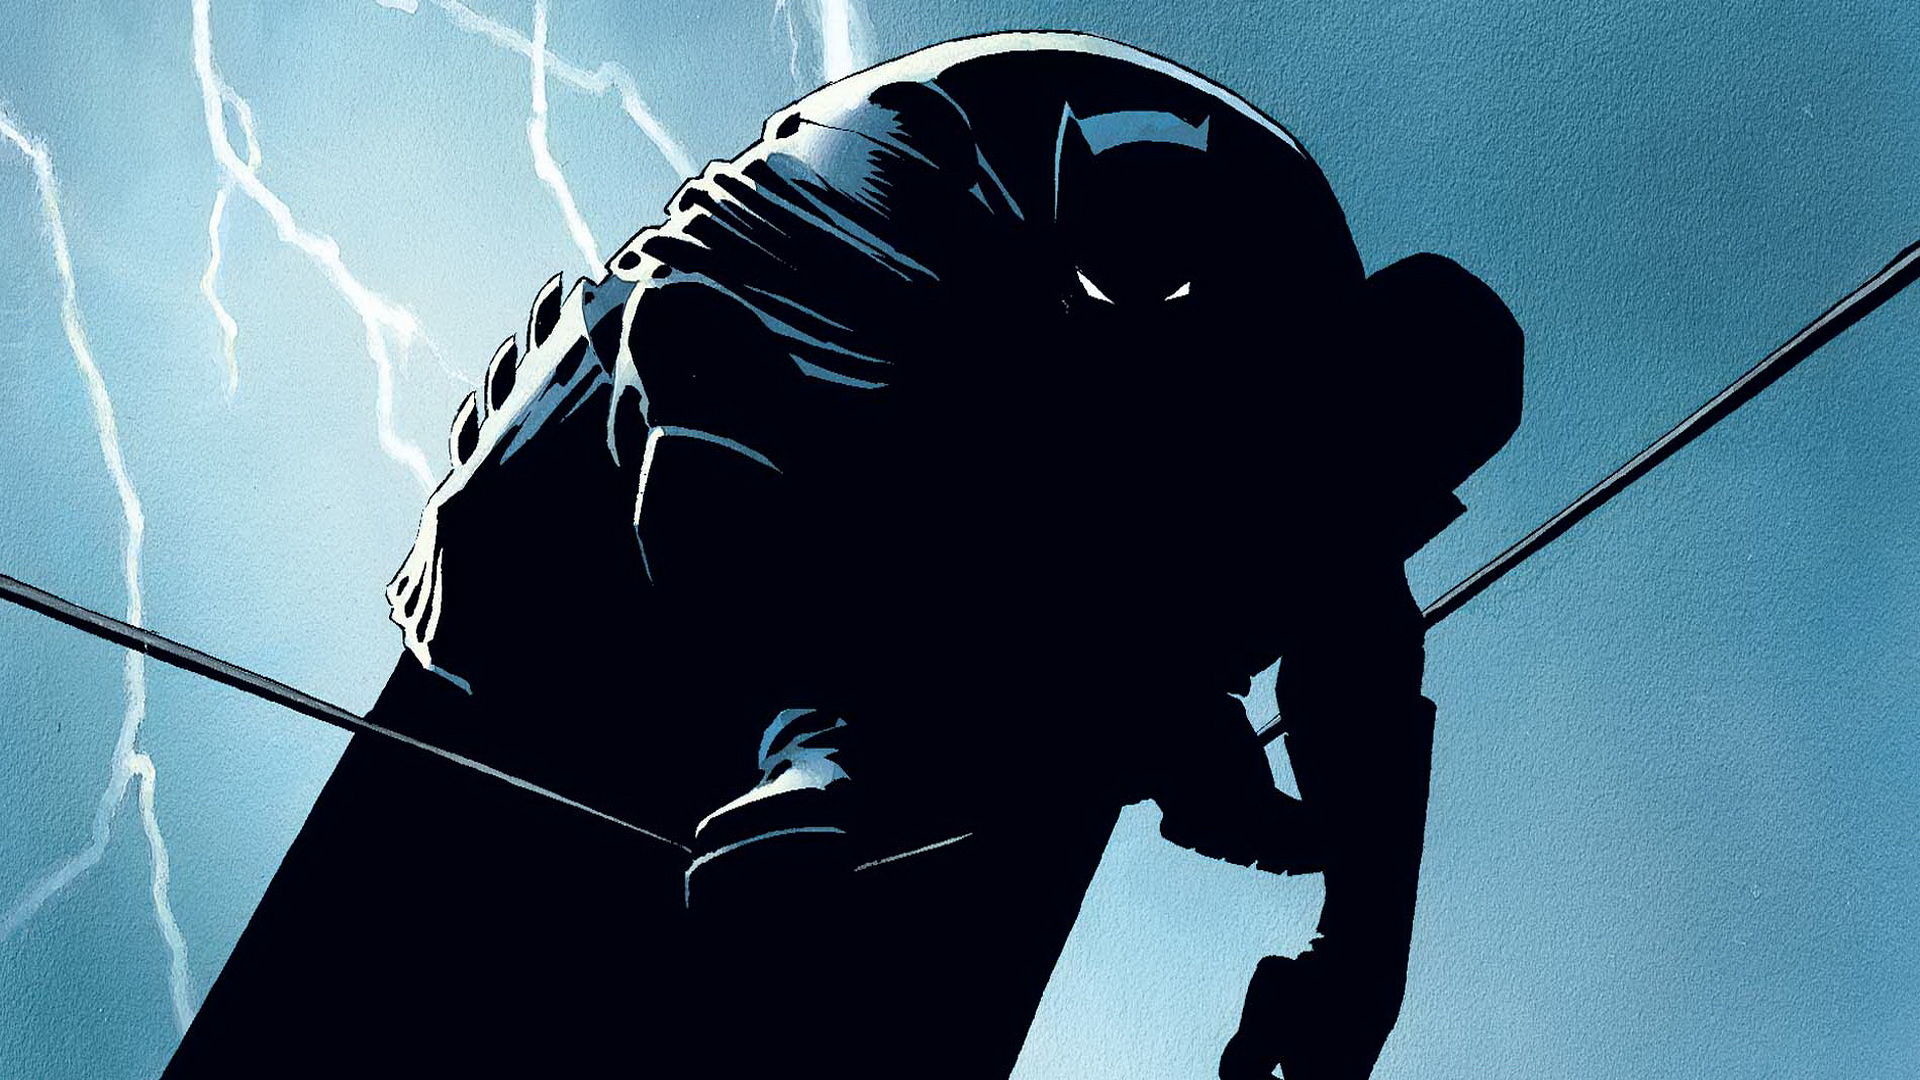 The Dark Knight Returns – Good material for Batman v Superman